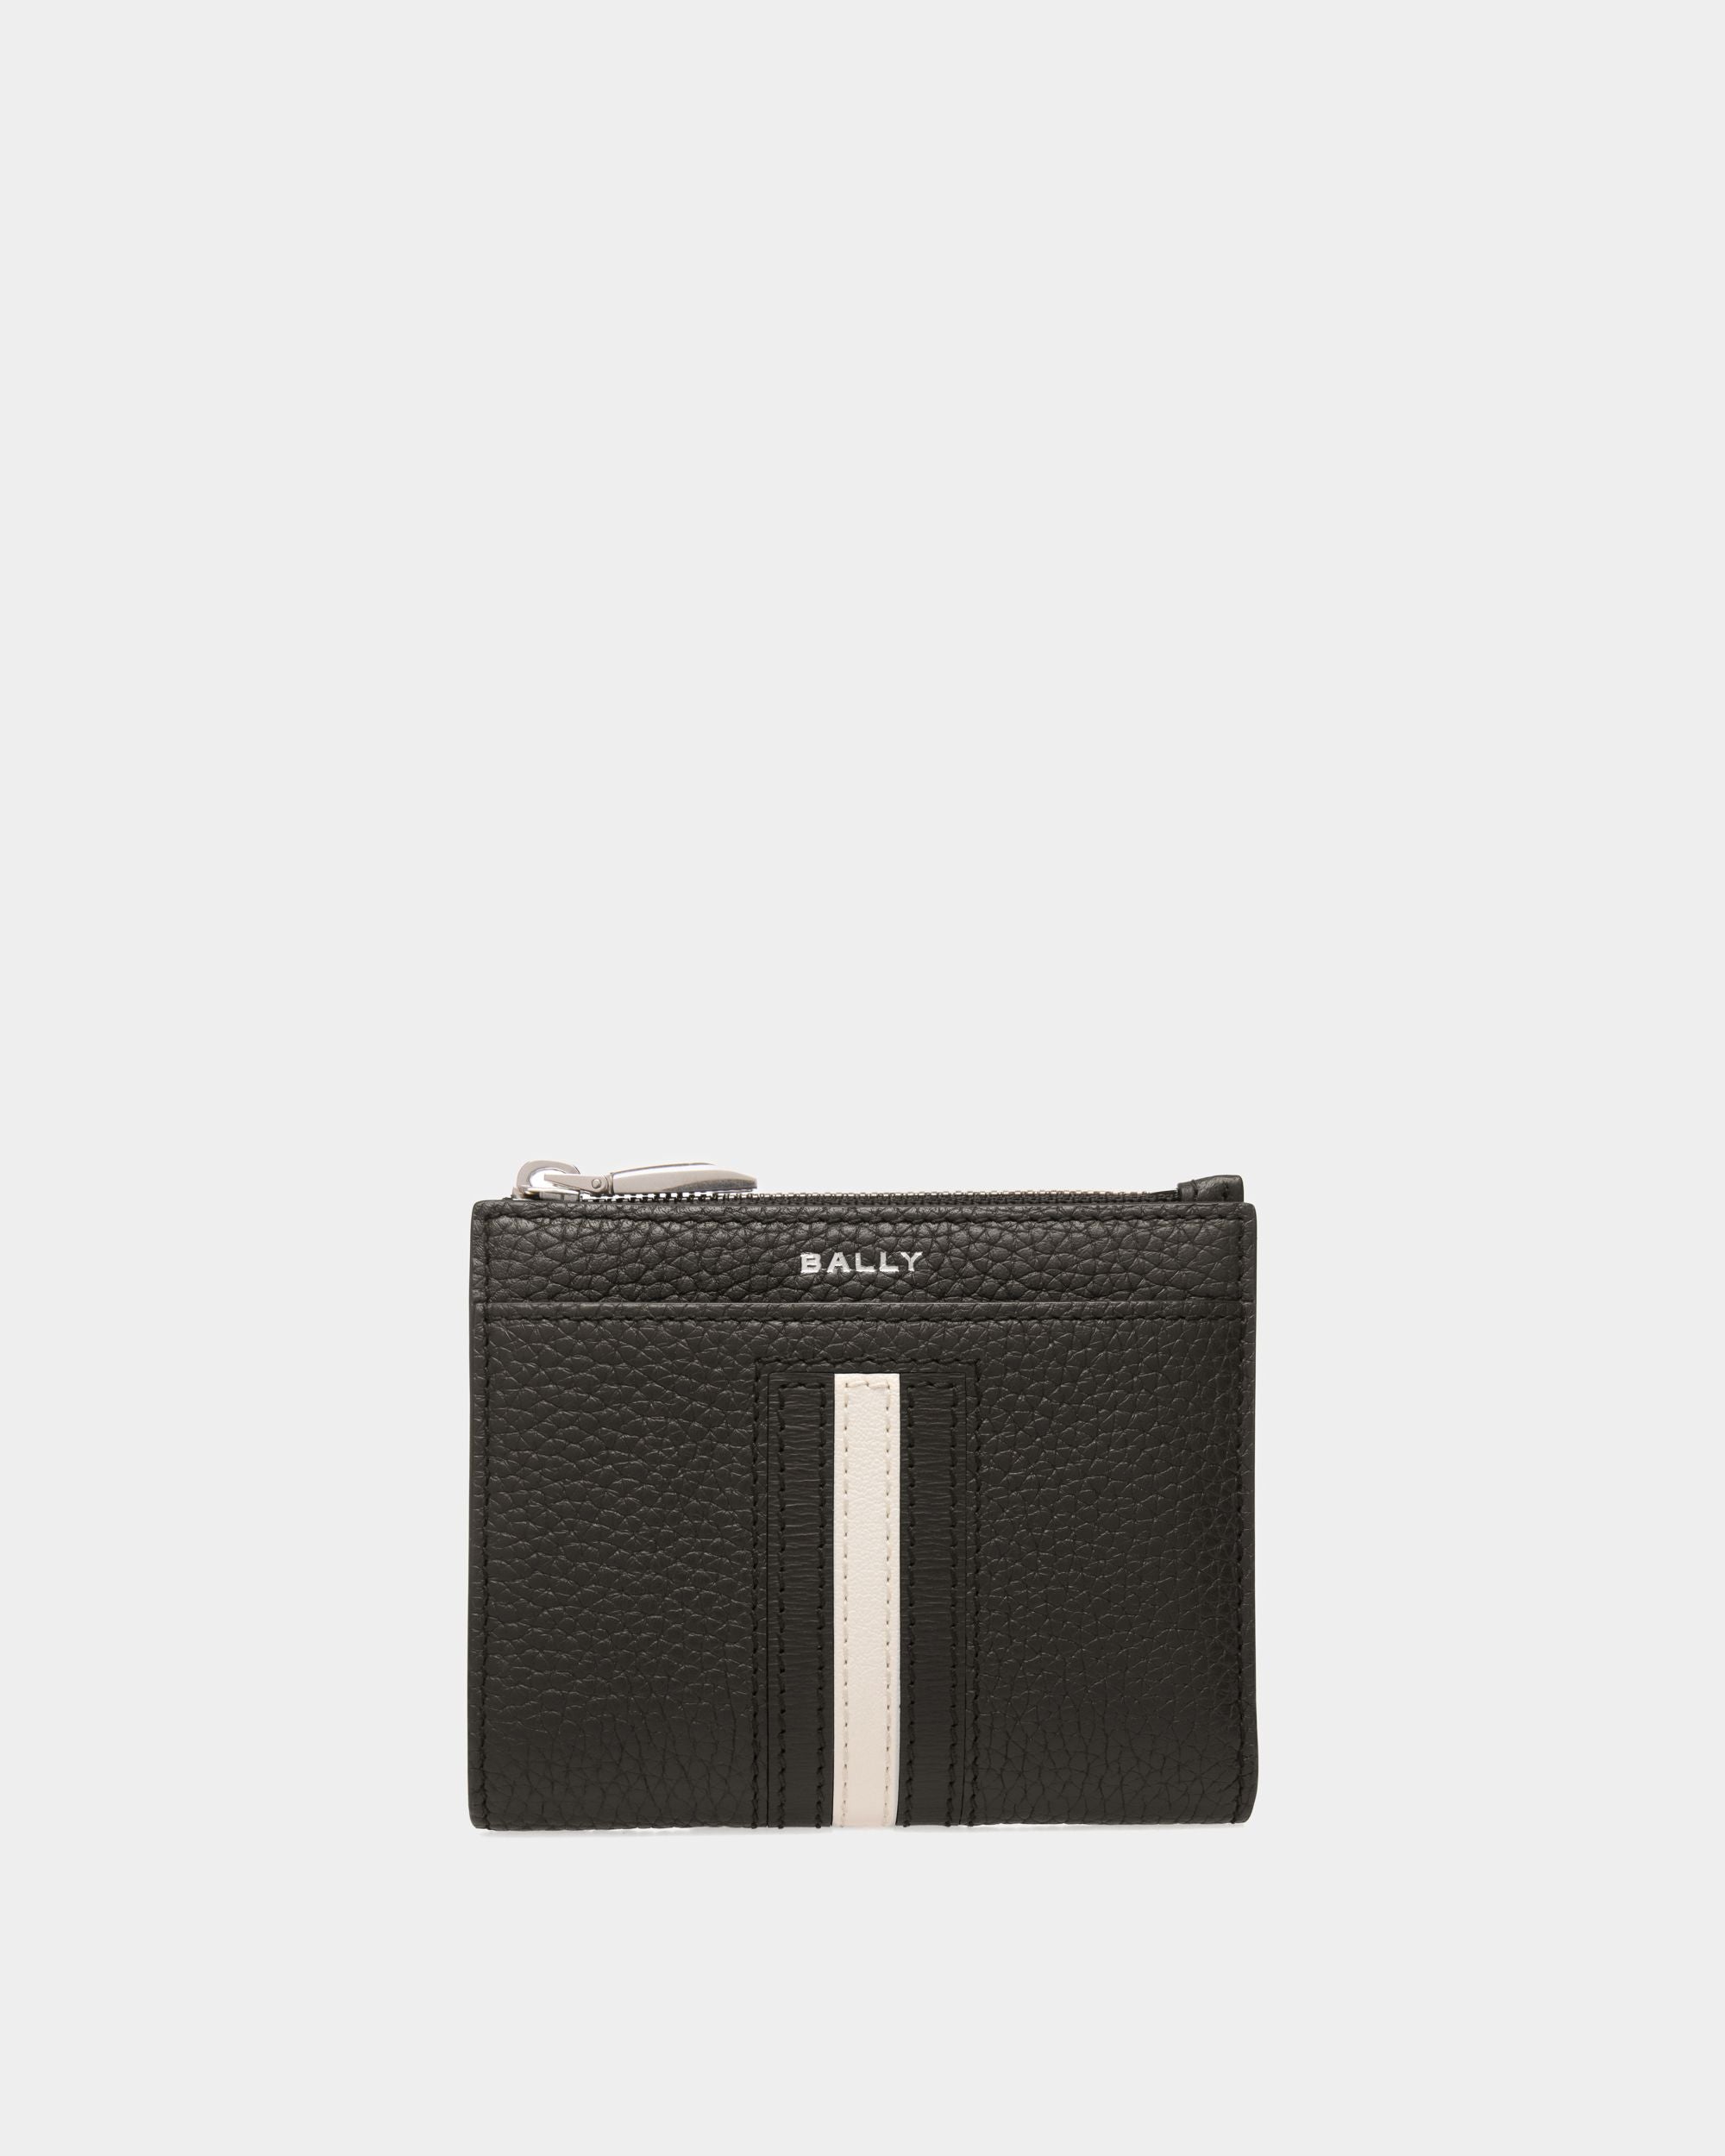 Ribbon Wallet | Men's Wallet | Black Leather | Bally | Still Life Front